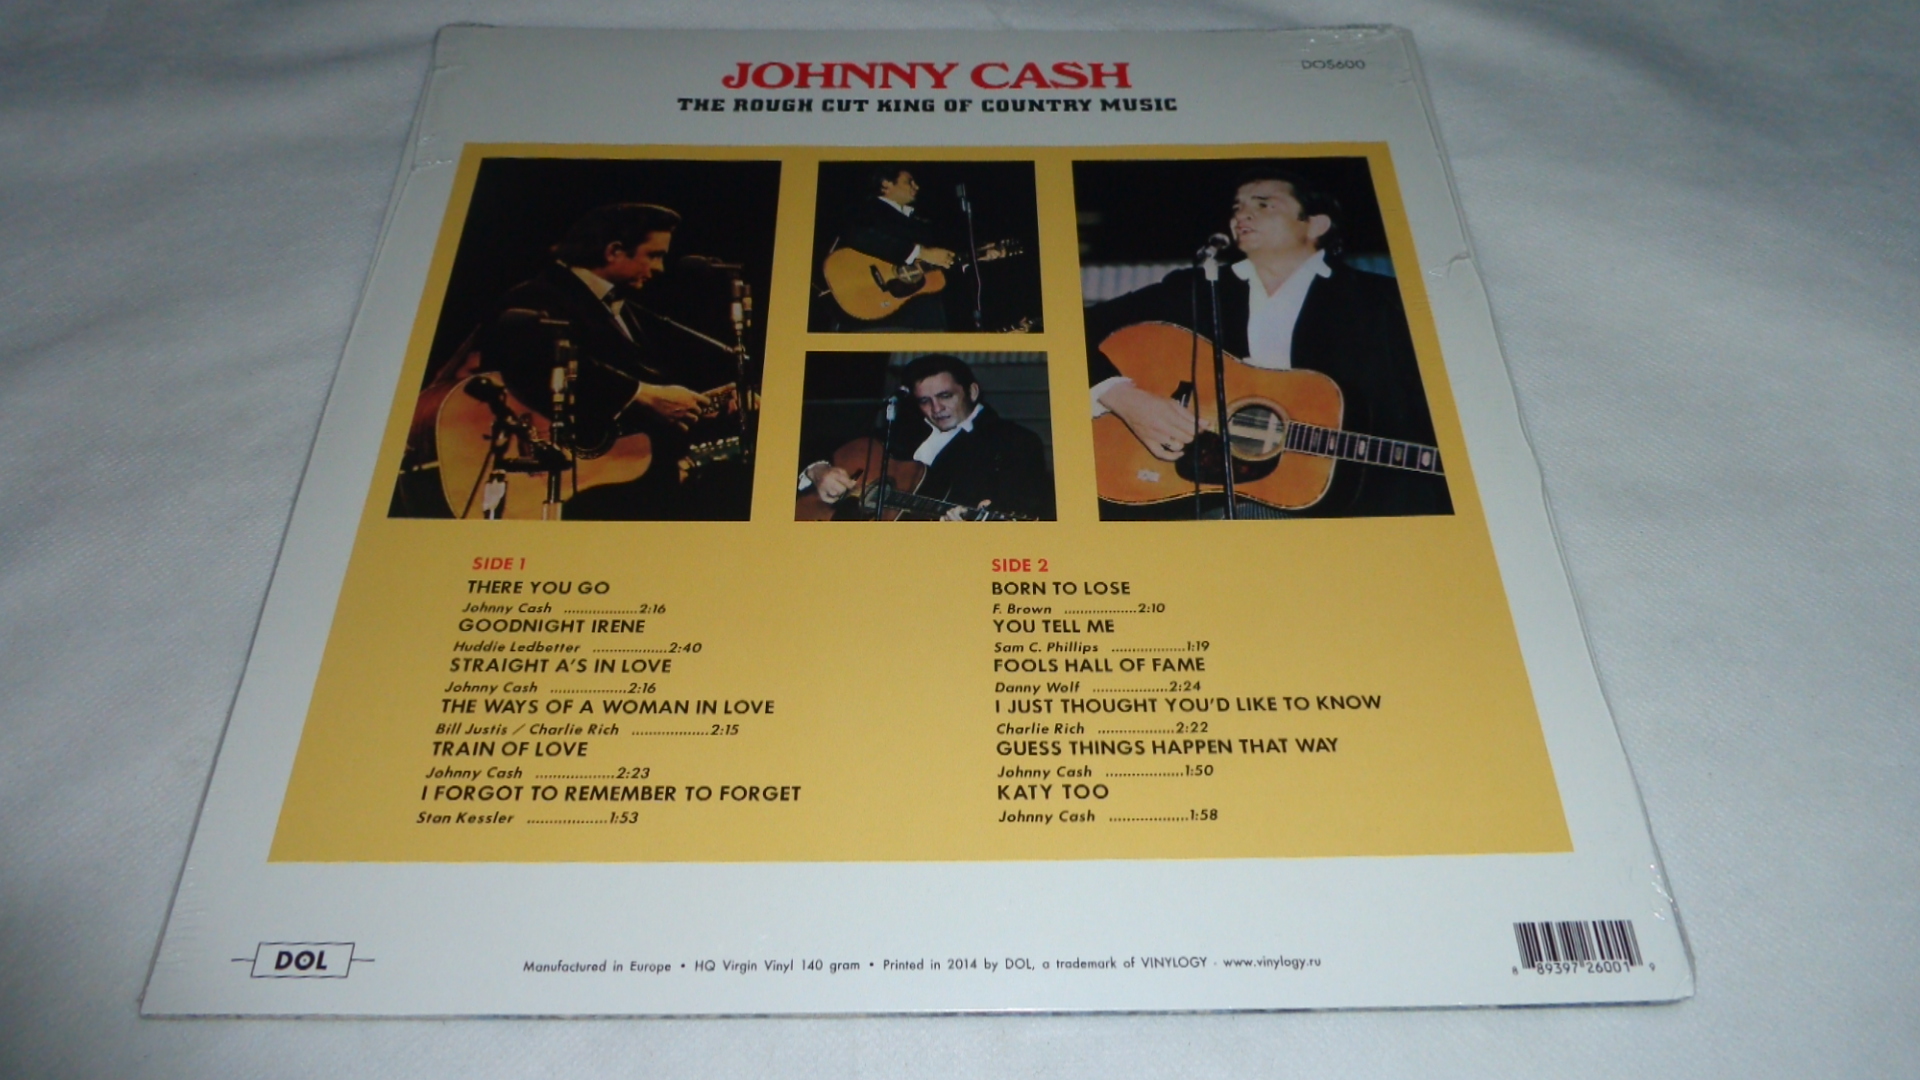 VINIL - Johnny Cash - the Rough Cut King of Country Music (EU)